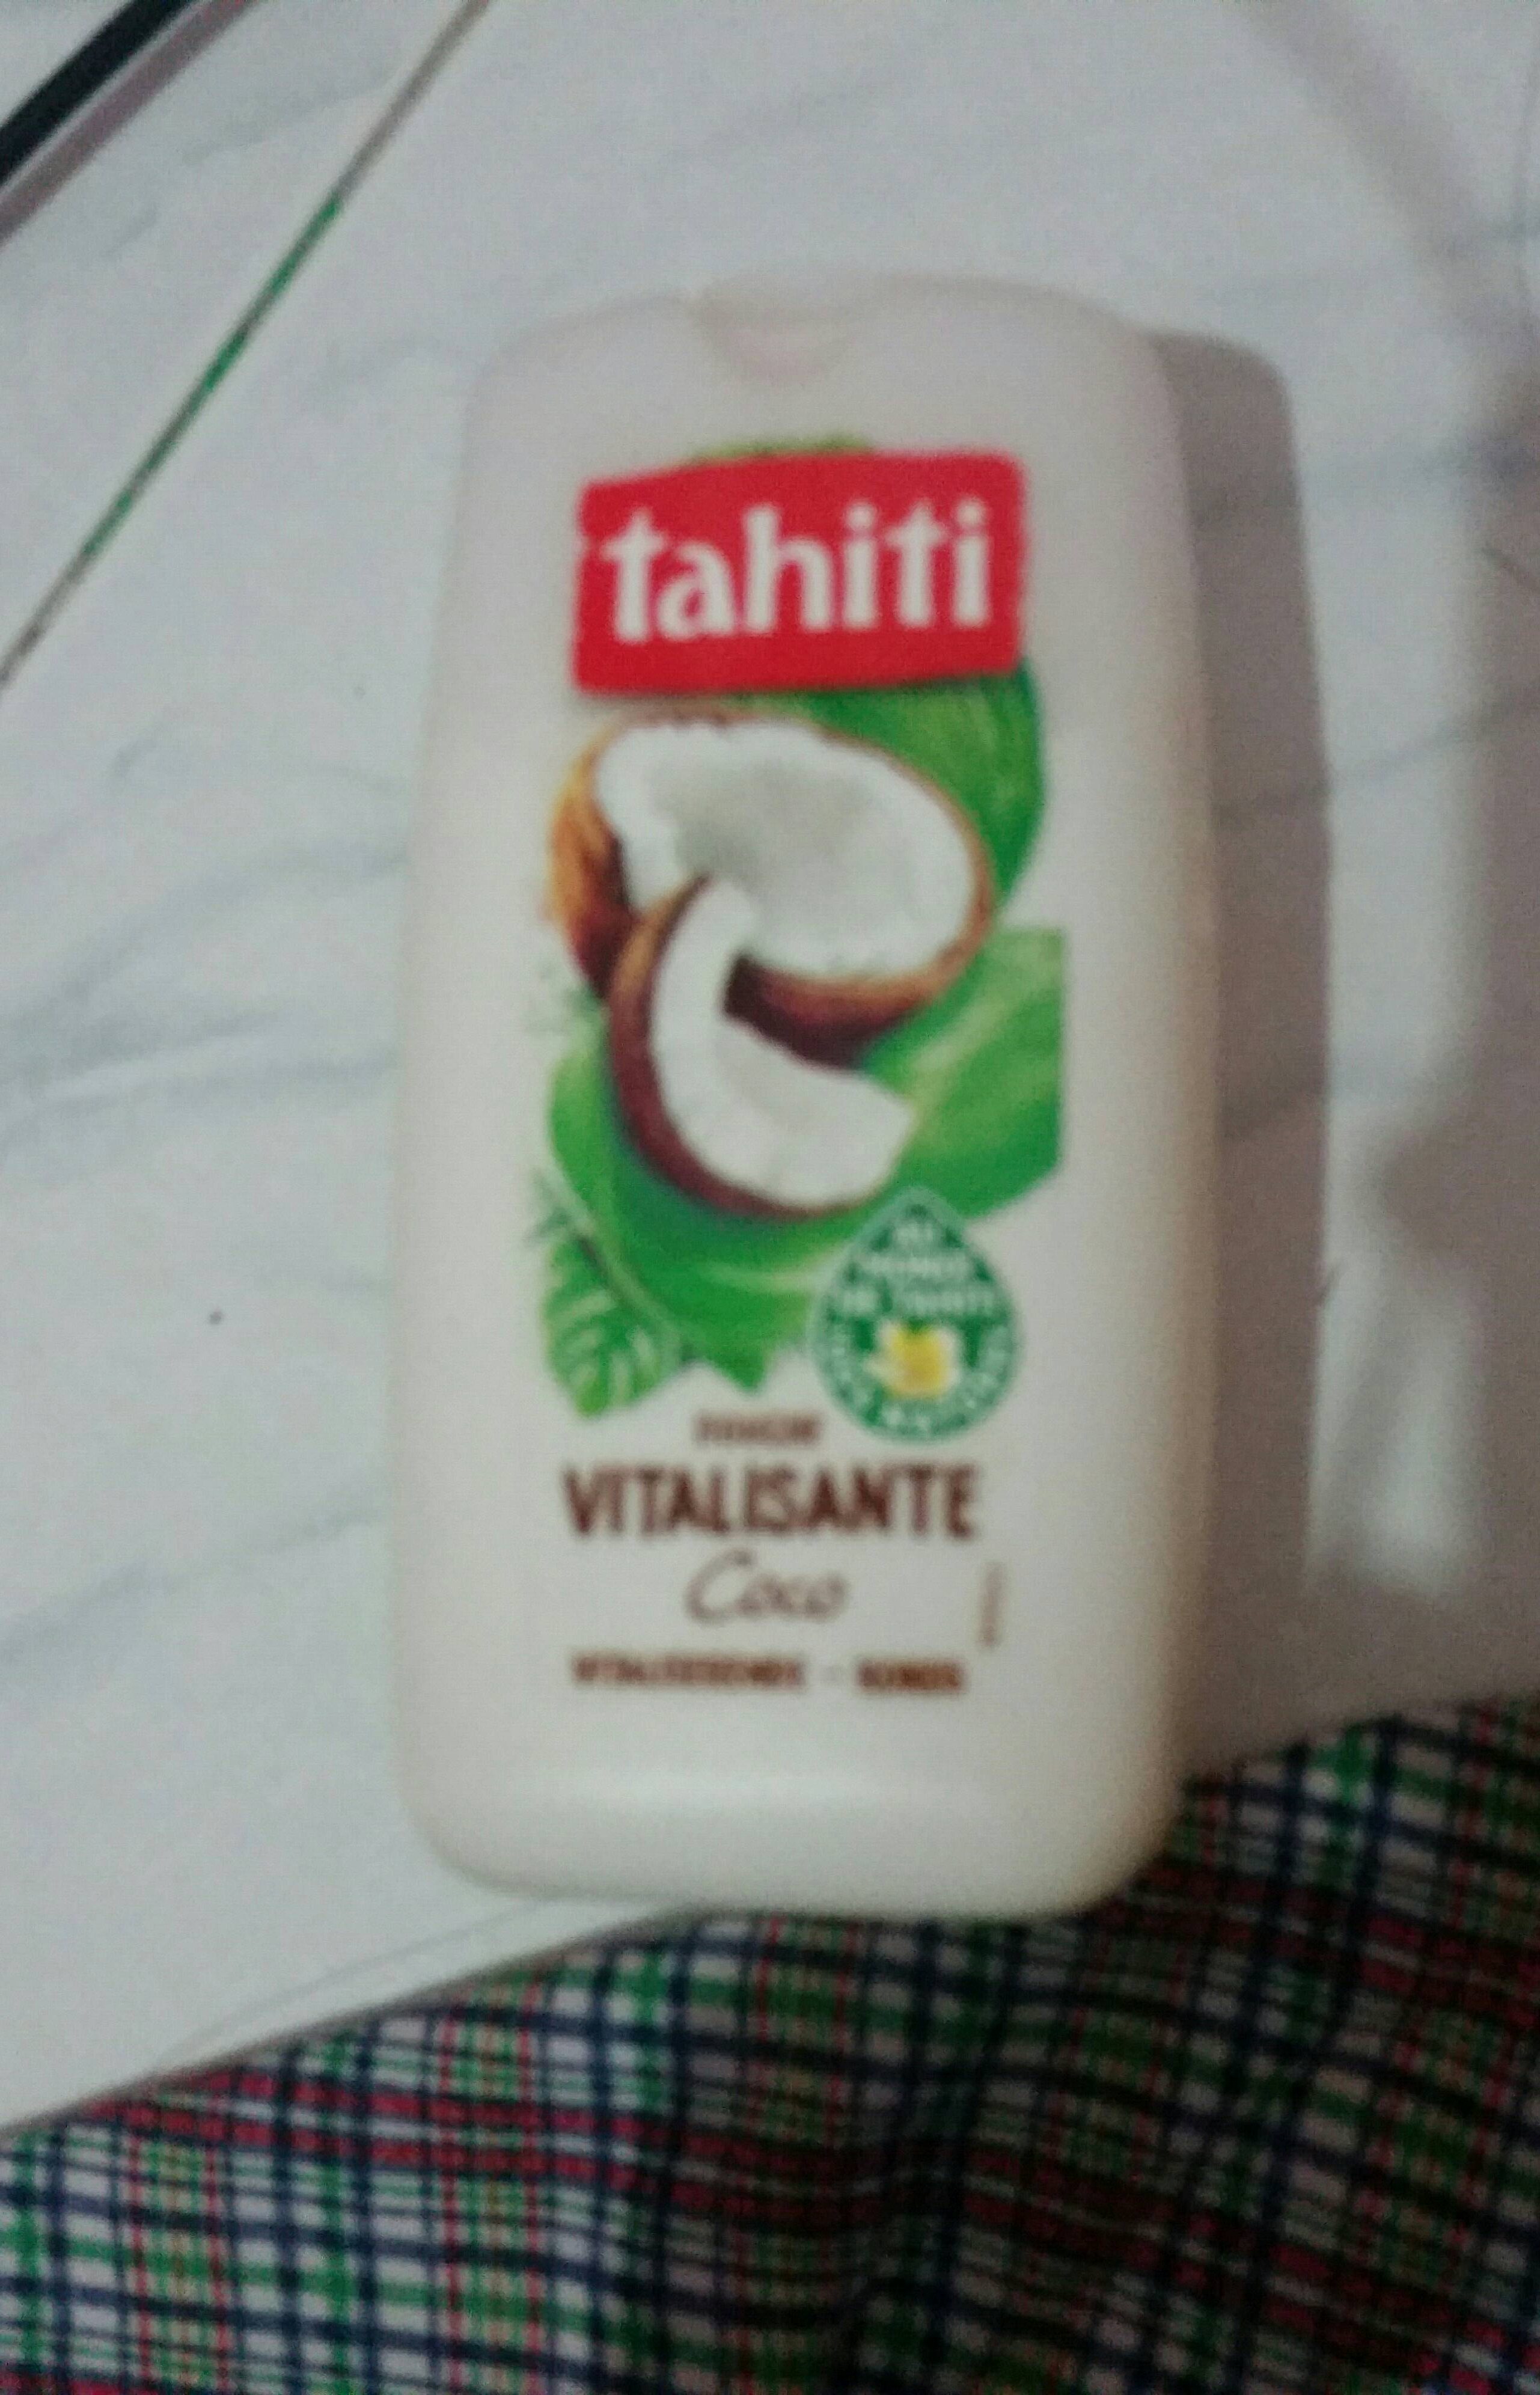 Tahiti Douche Vitalisante Coco - Product - en